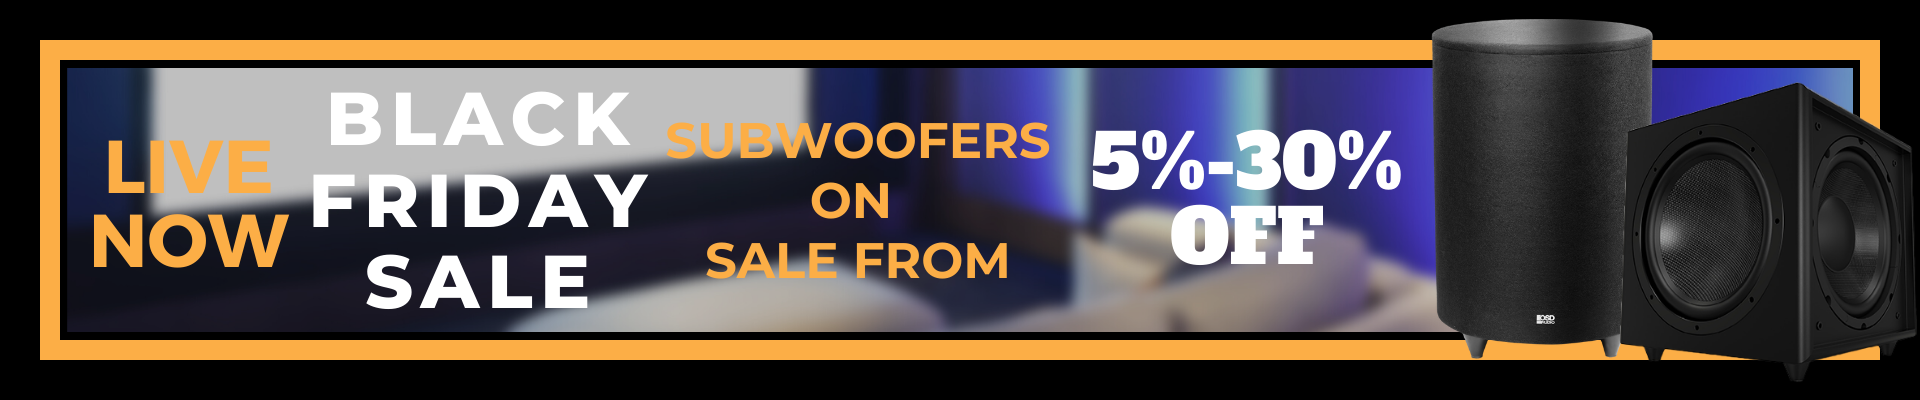 Black Friday Subwoofers on Sale Banner. Deals Between 5-30% Off.